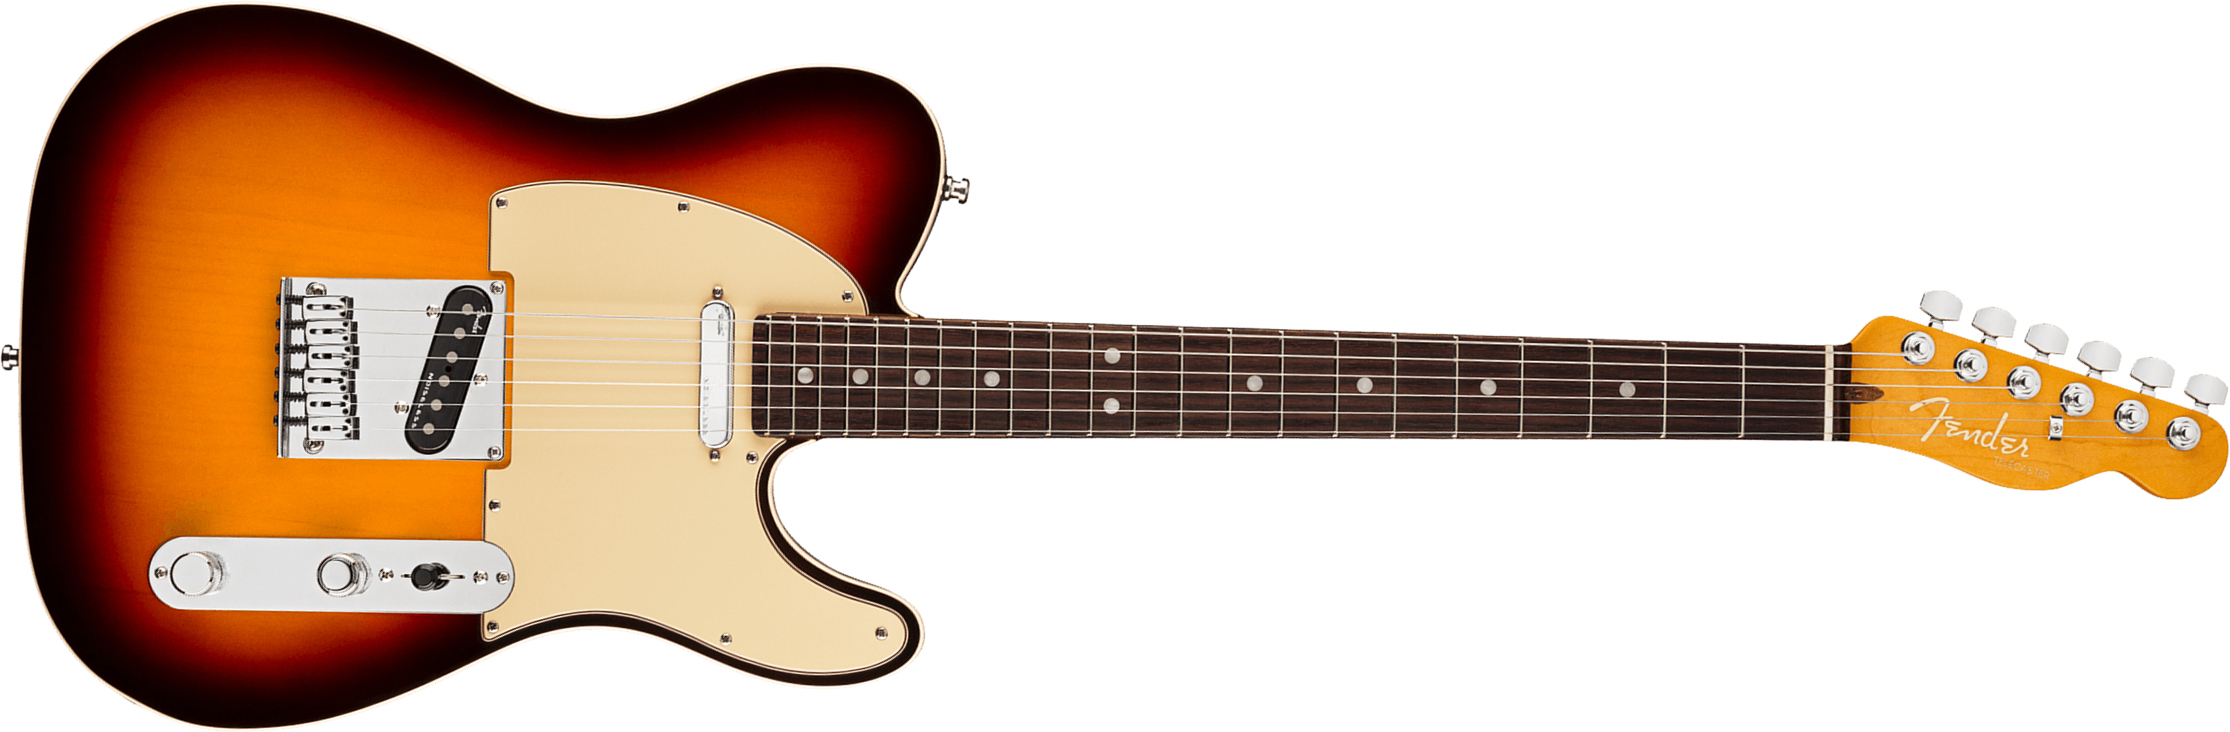 Fender Tele American Ultra 2019 Usa Rw - Ultraburst - Guitarra eléctrica con forma de tel - Main picture